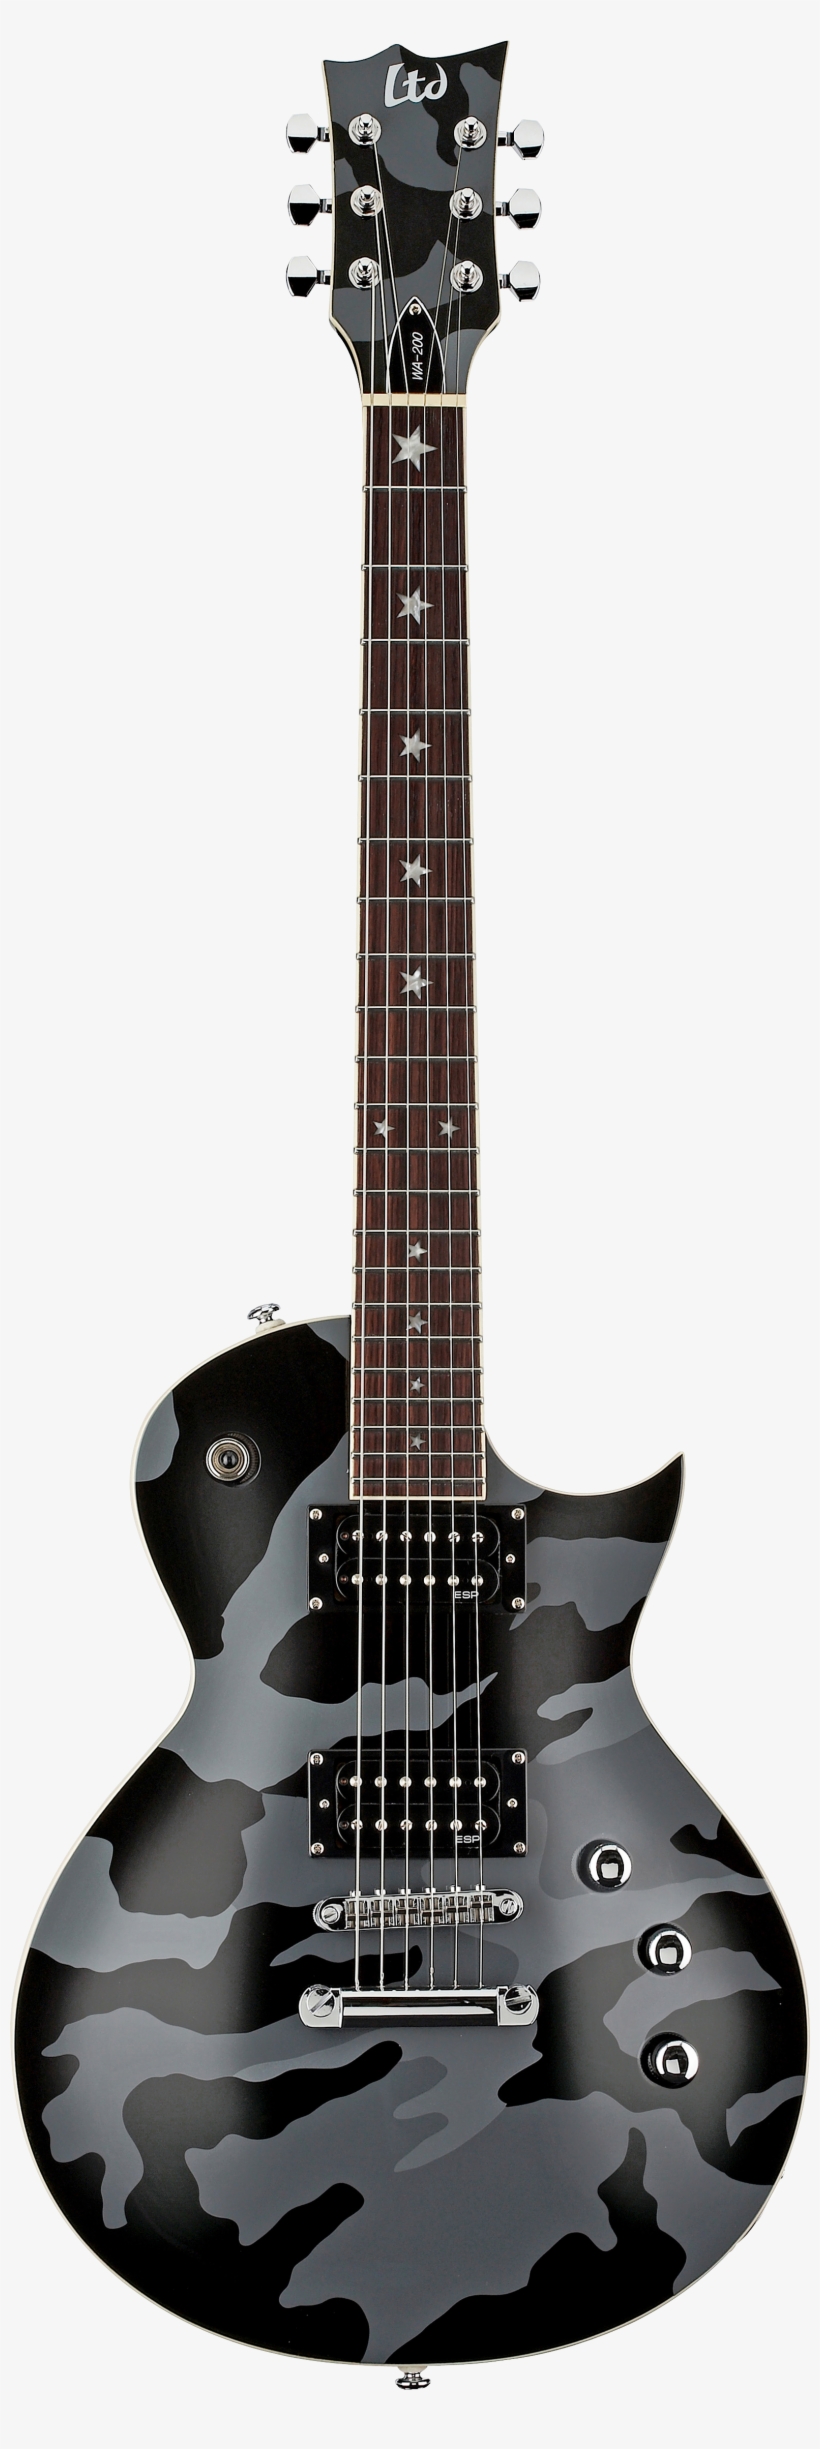 Black Electric Guitar Png Image - Guitar Png For Picsart, transparent png #684701